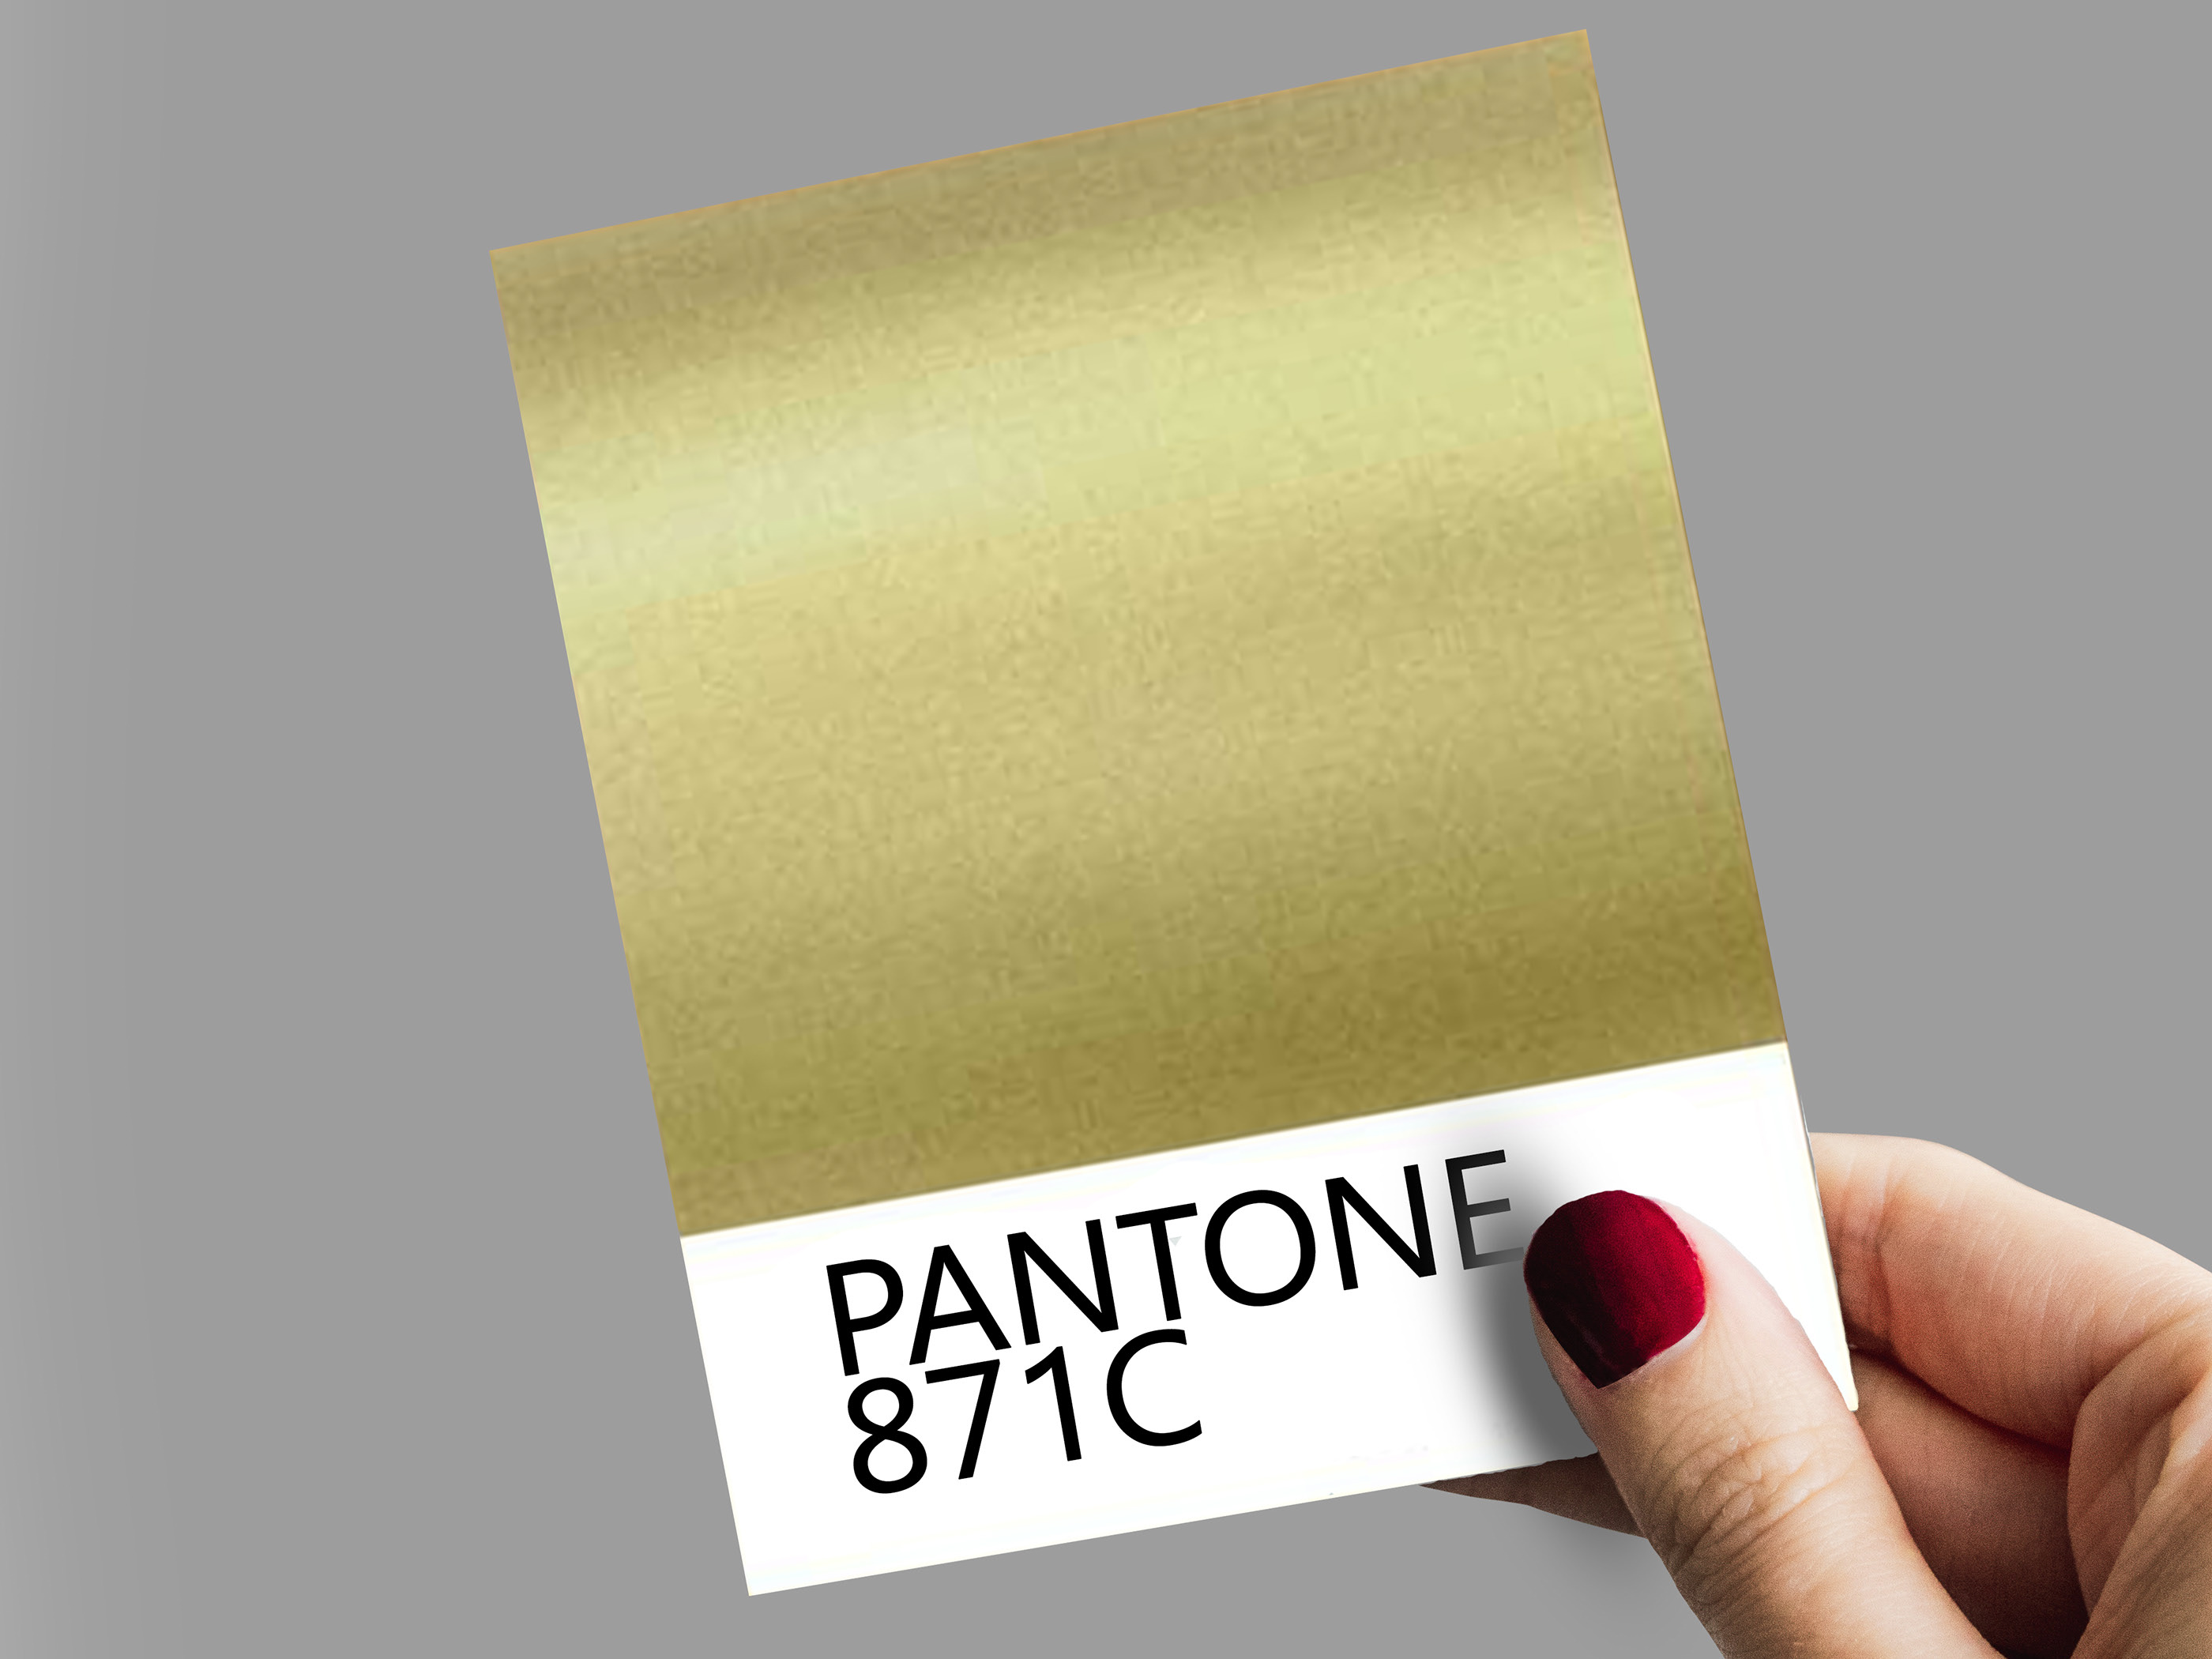 Pantone 871 C. CMYK 0%, 11%, 41%, 48. 